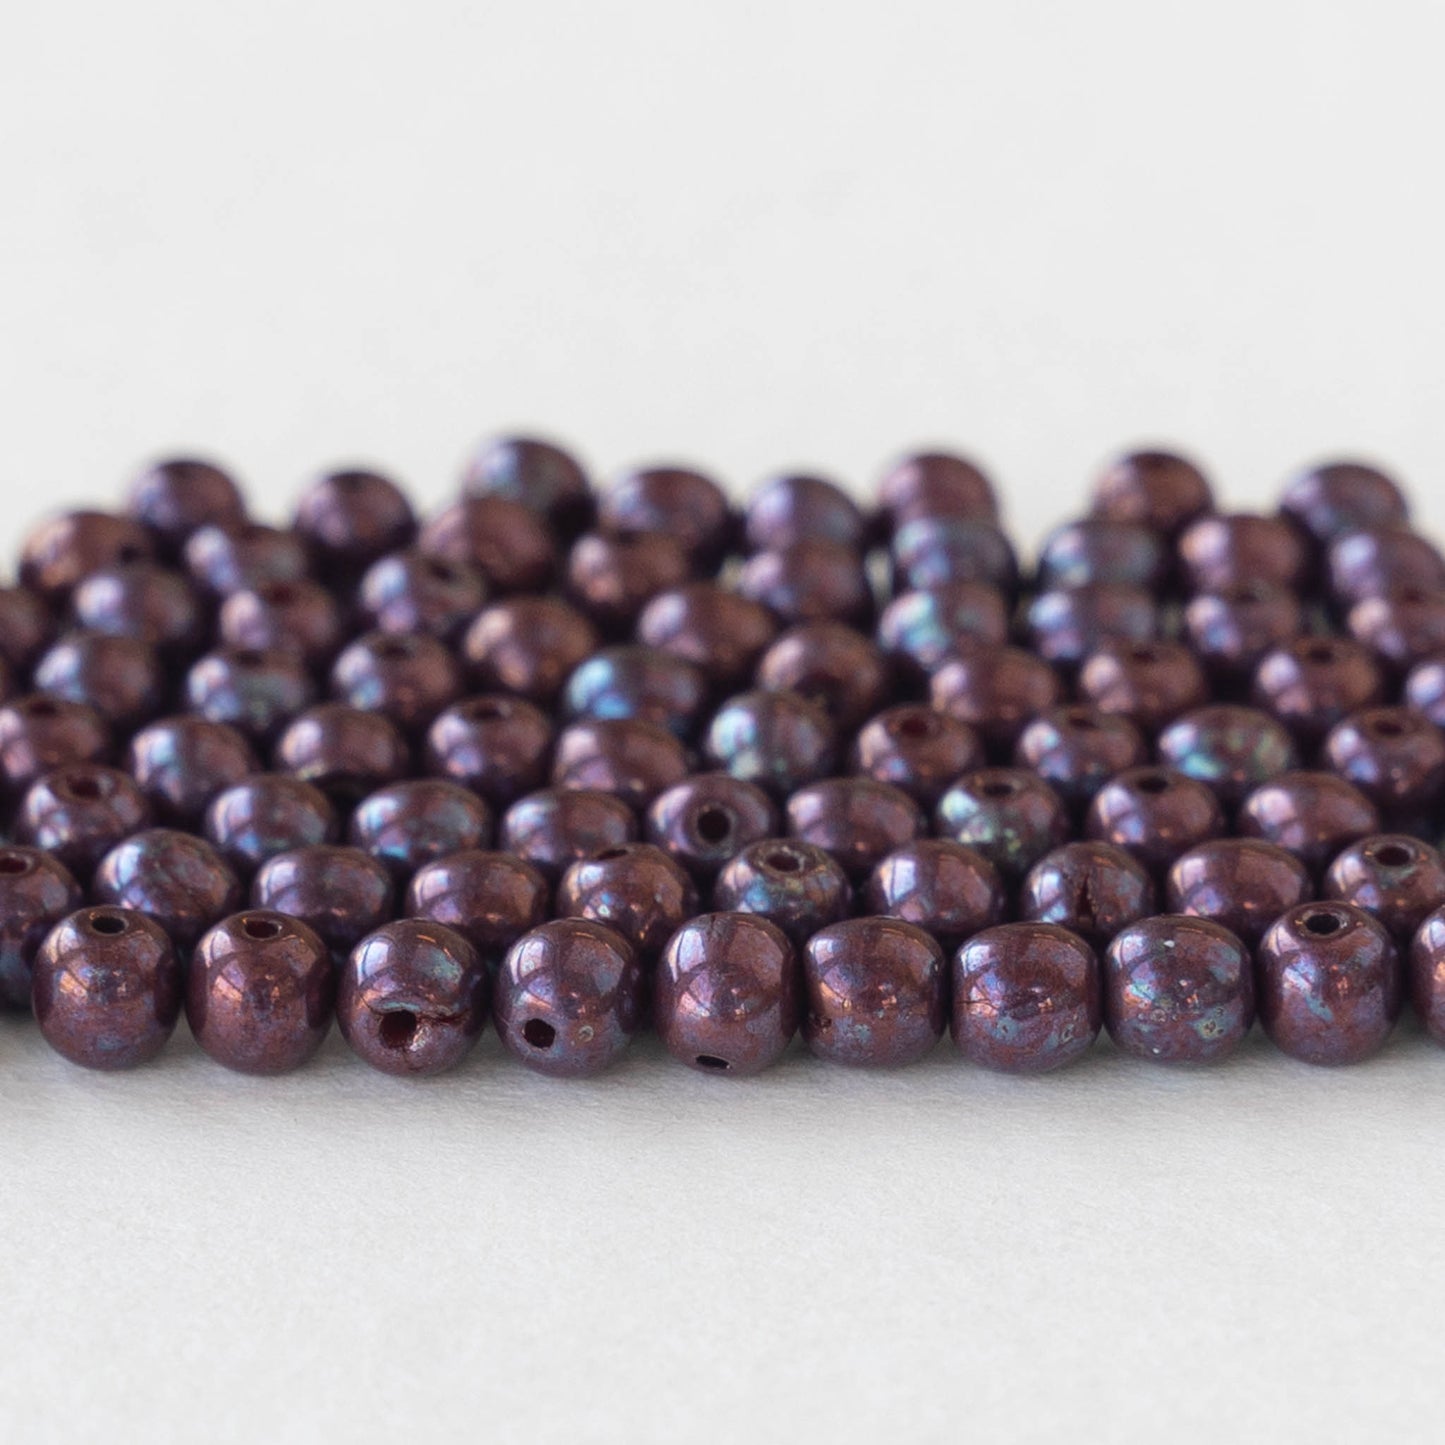 4mm Round Glass Beads - Metallic Mix of Purple and Pink - 100 Beads